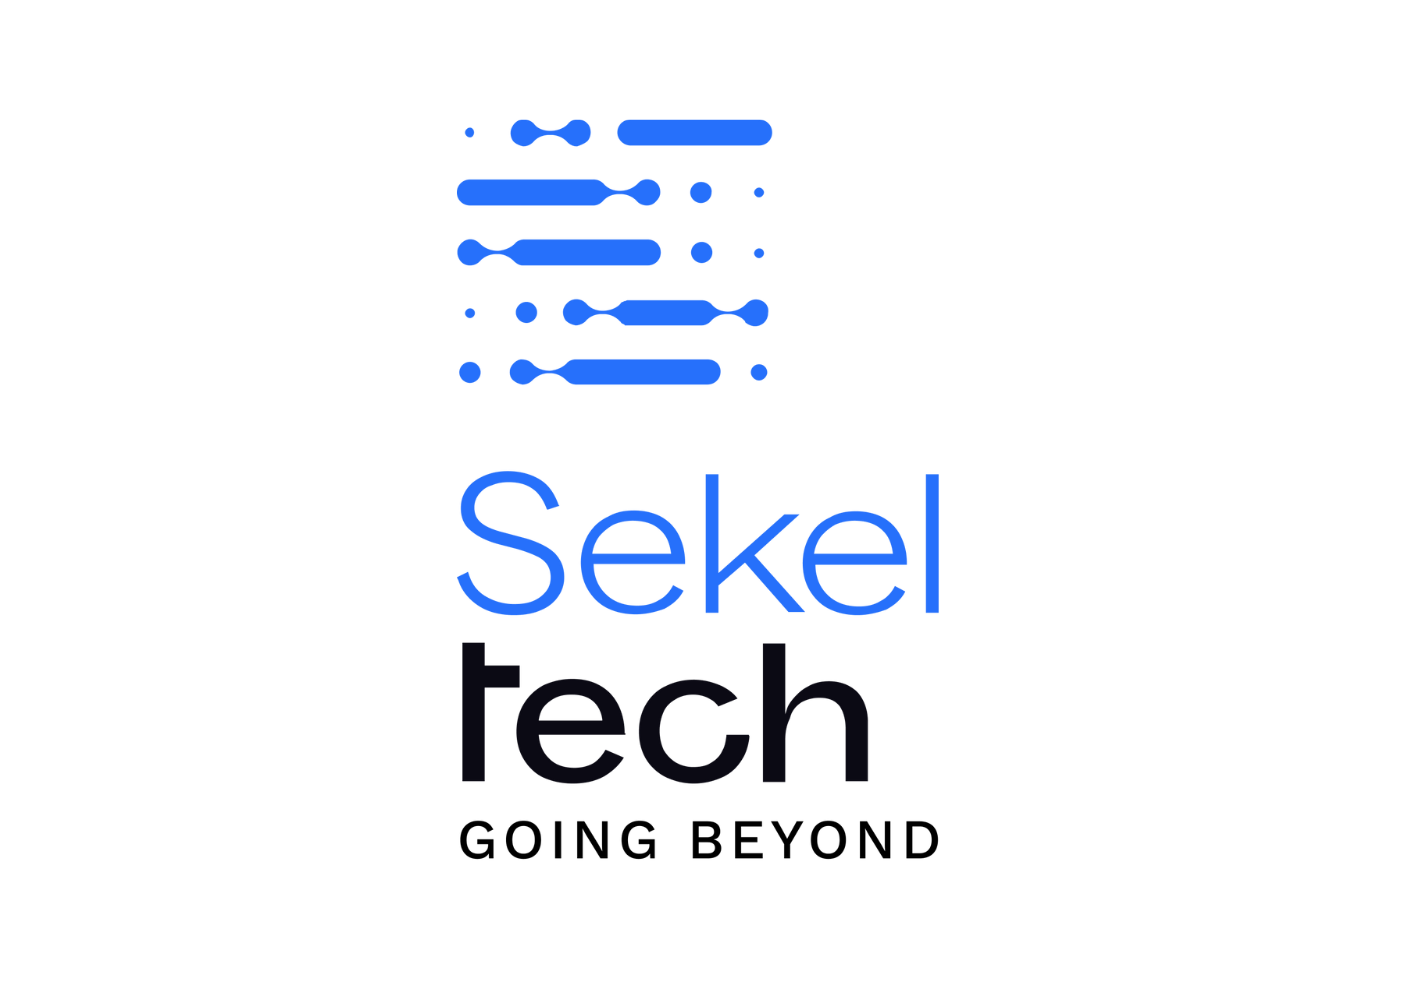 Sekel Tech Revamps Brand Identity With A New Logo & Tagline